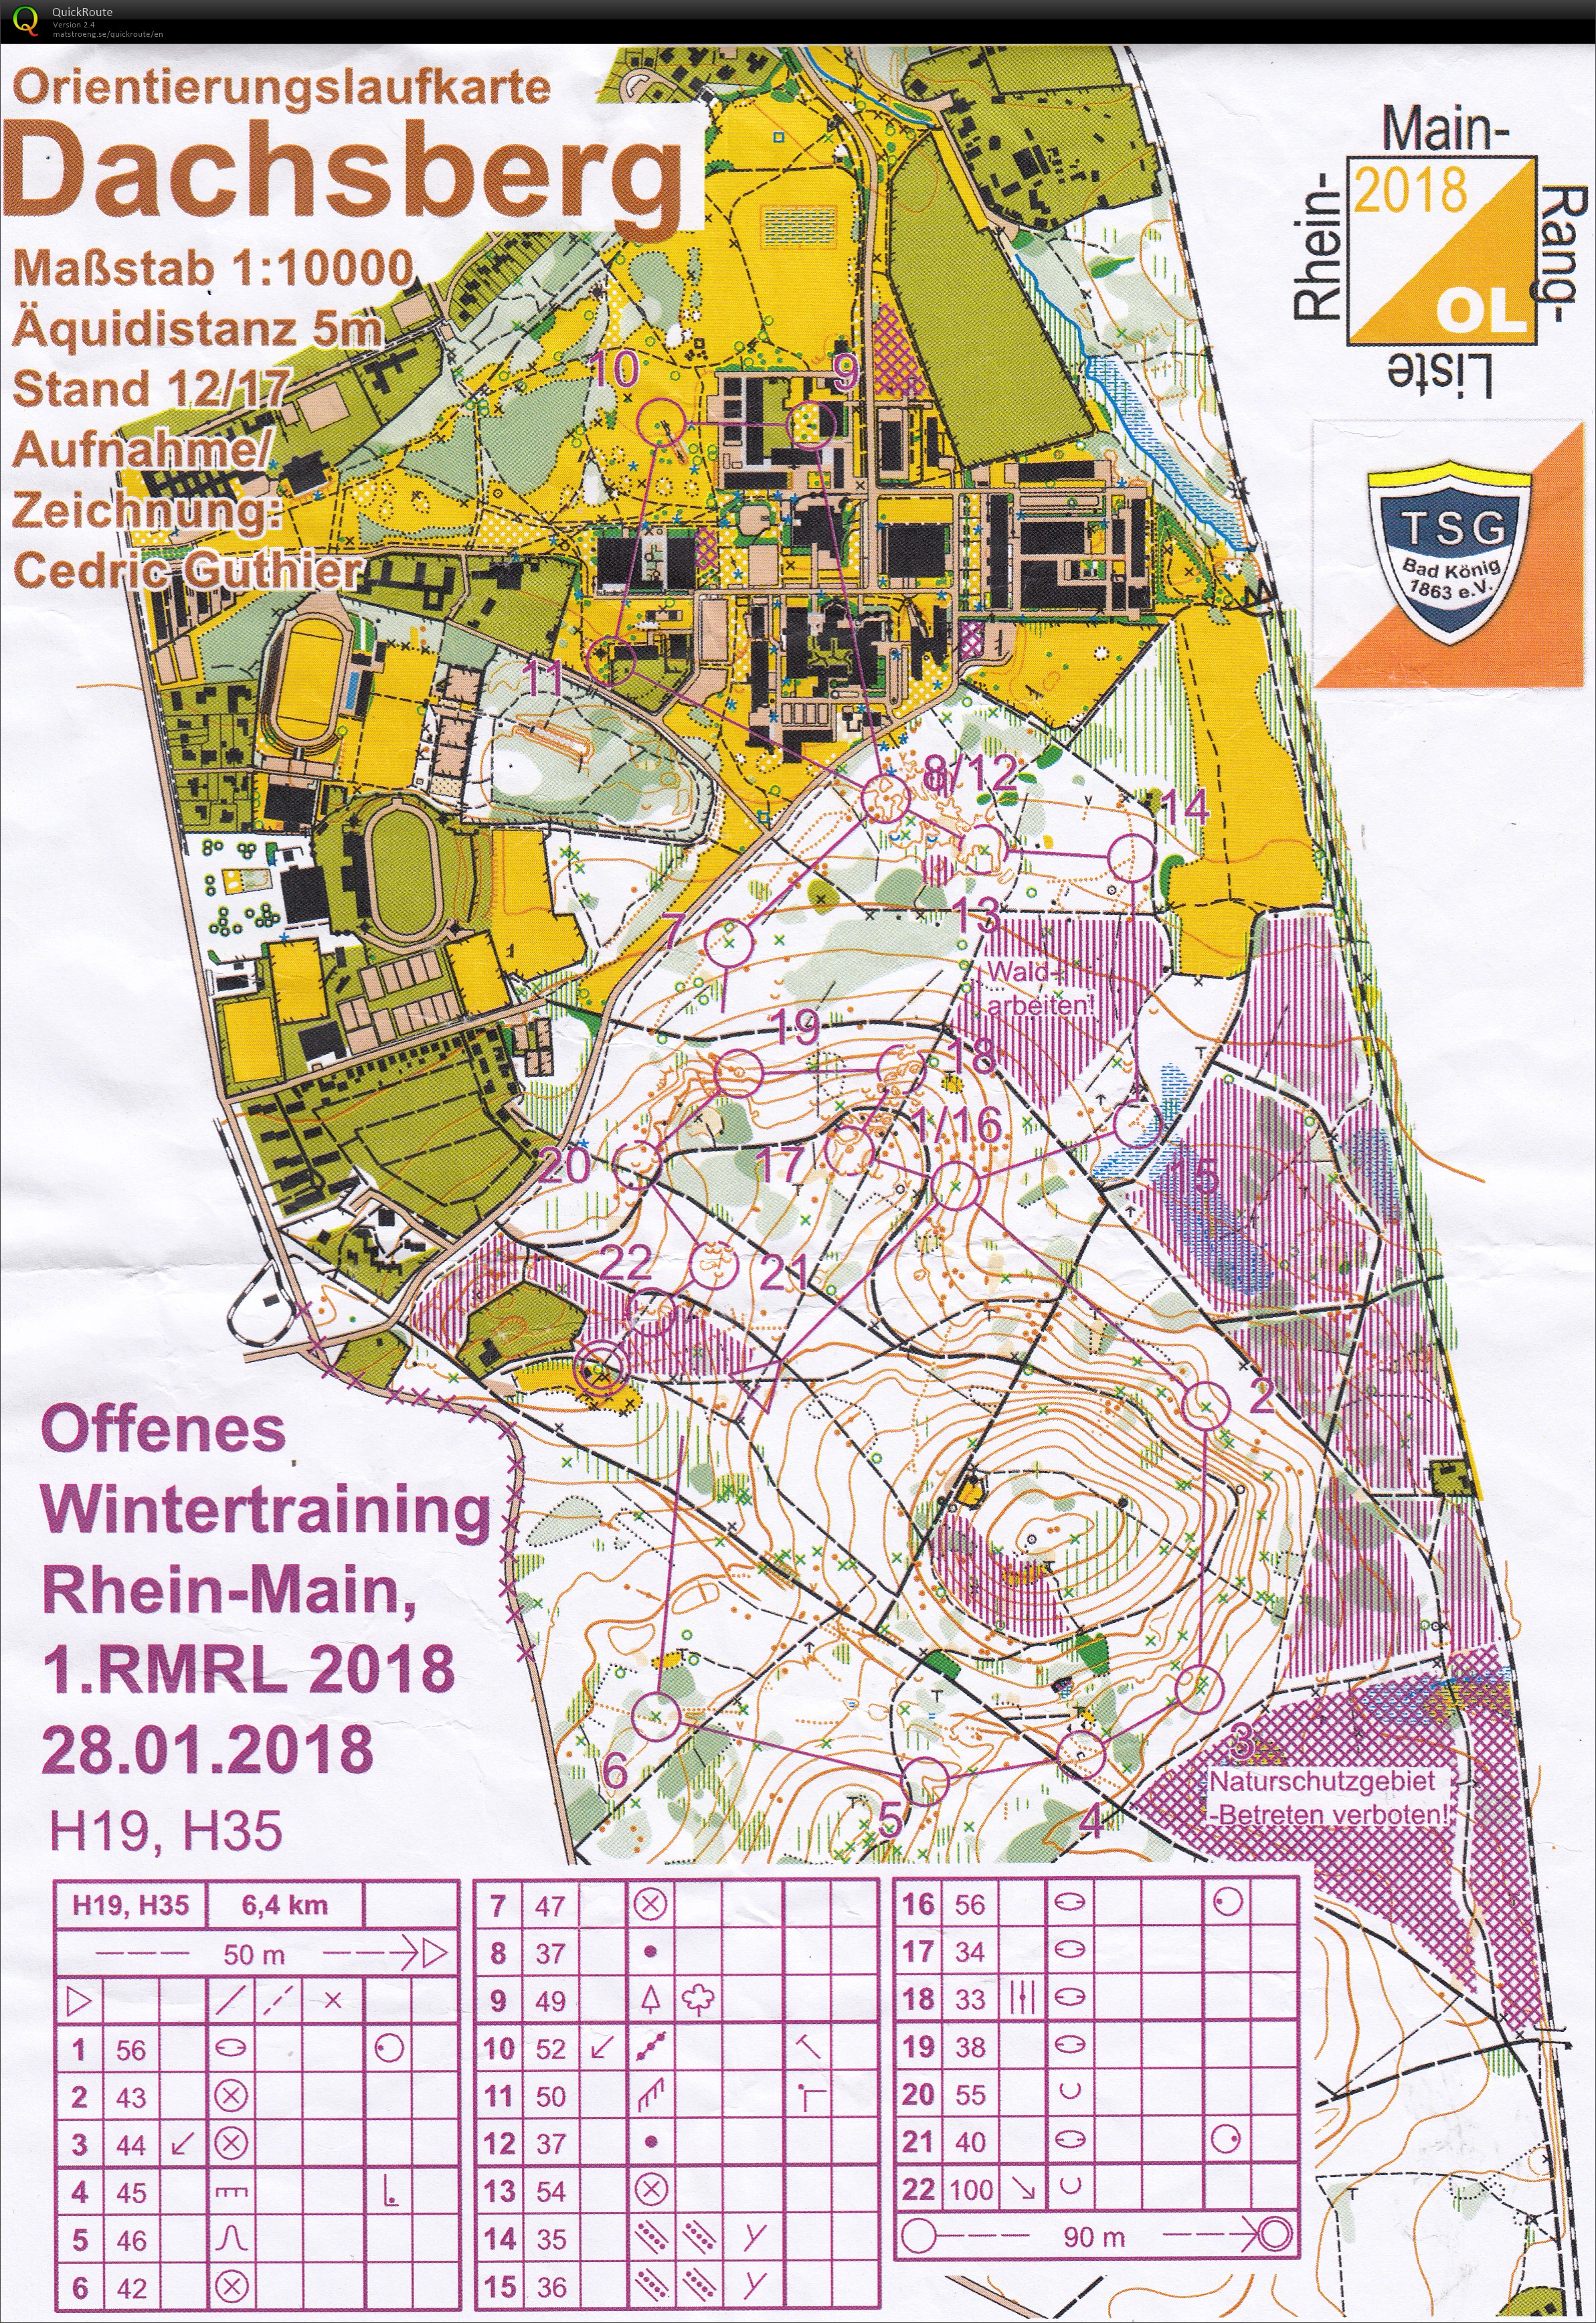 Open winter training / Rhein-Main ranking event (28/01/2018)